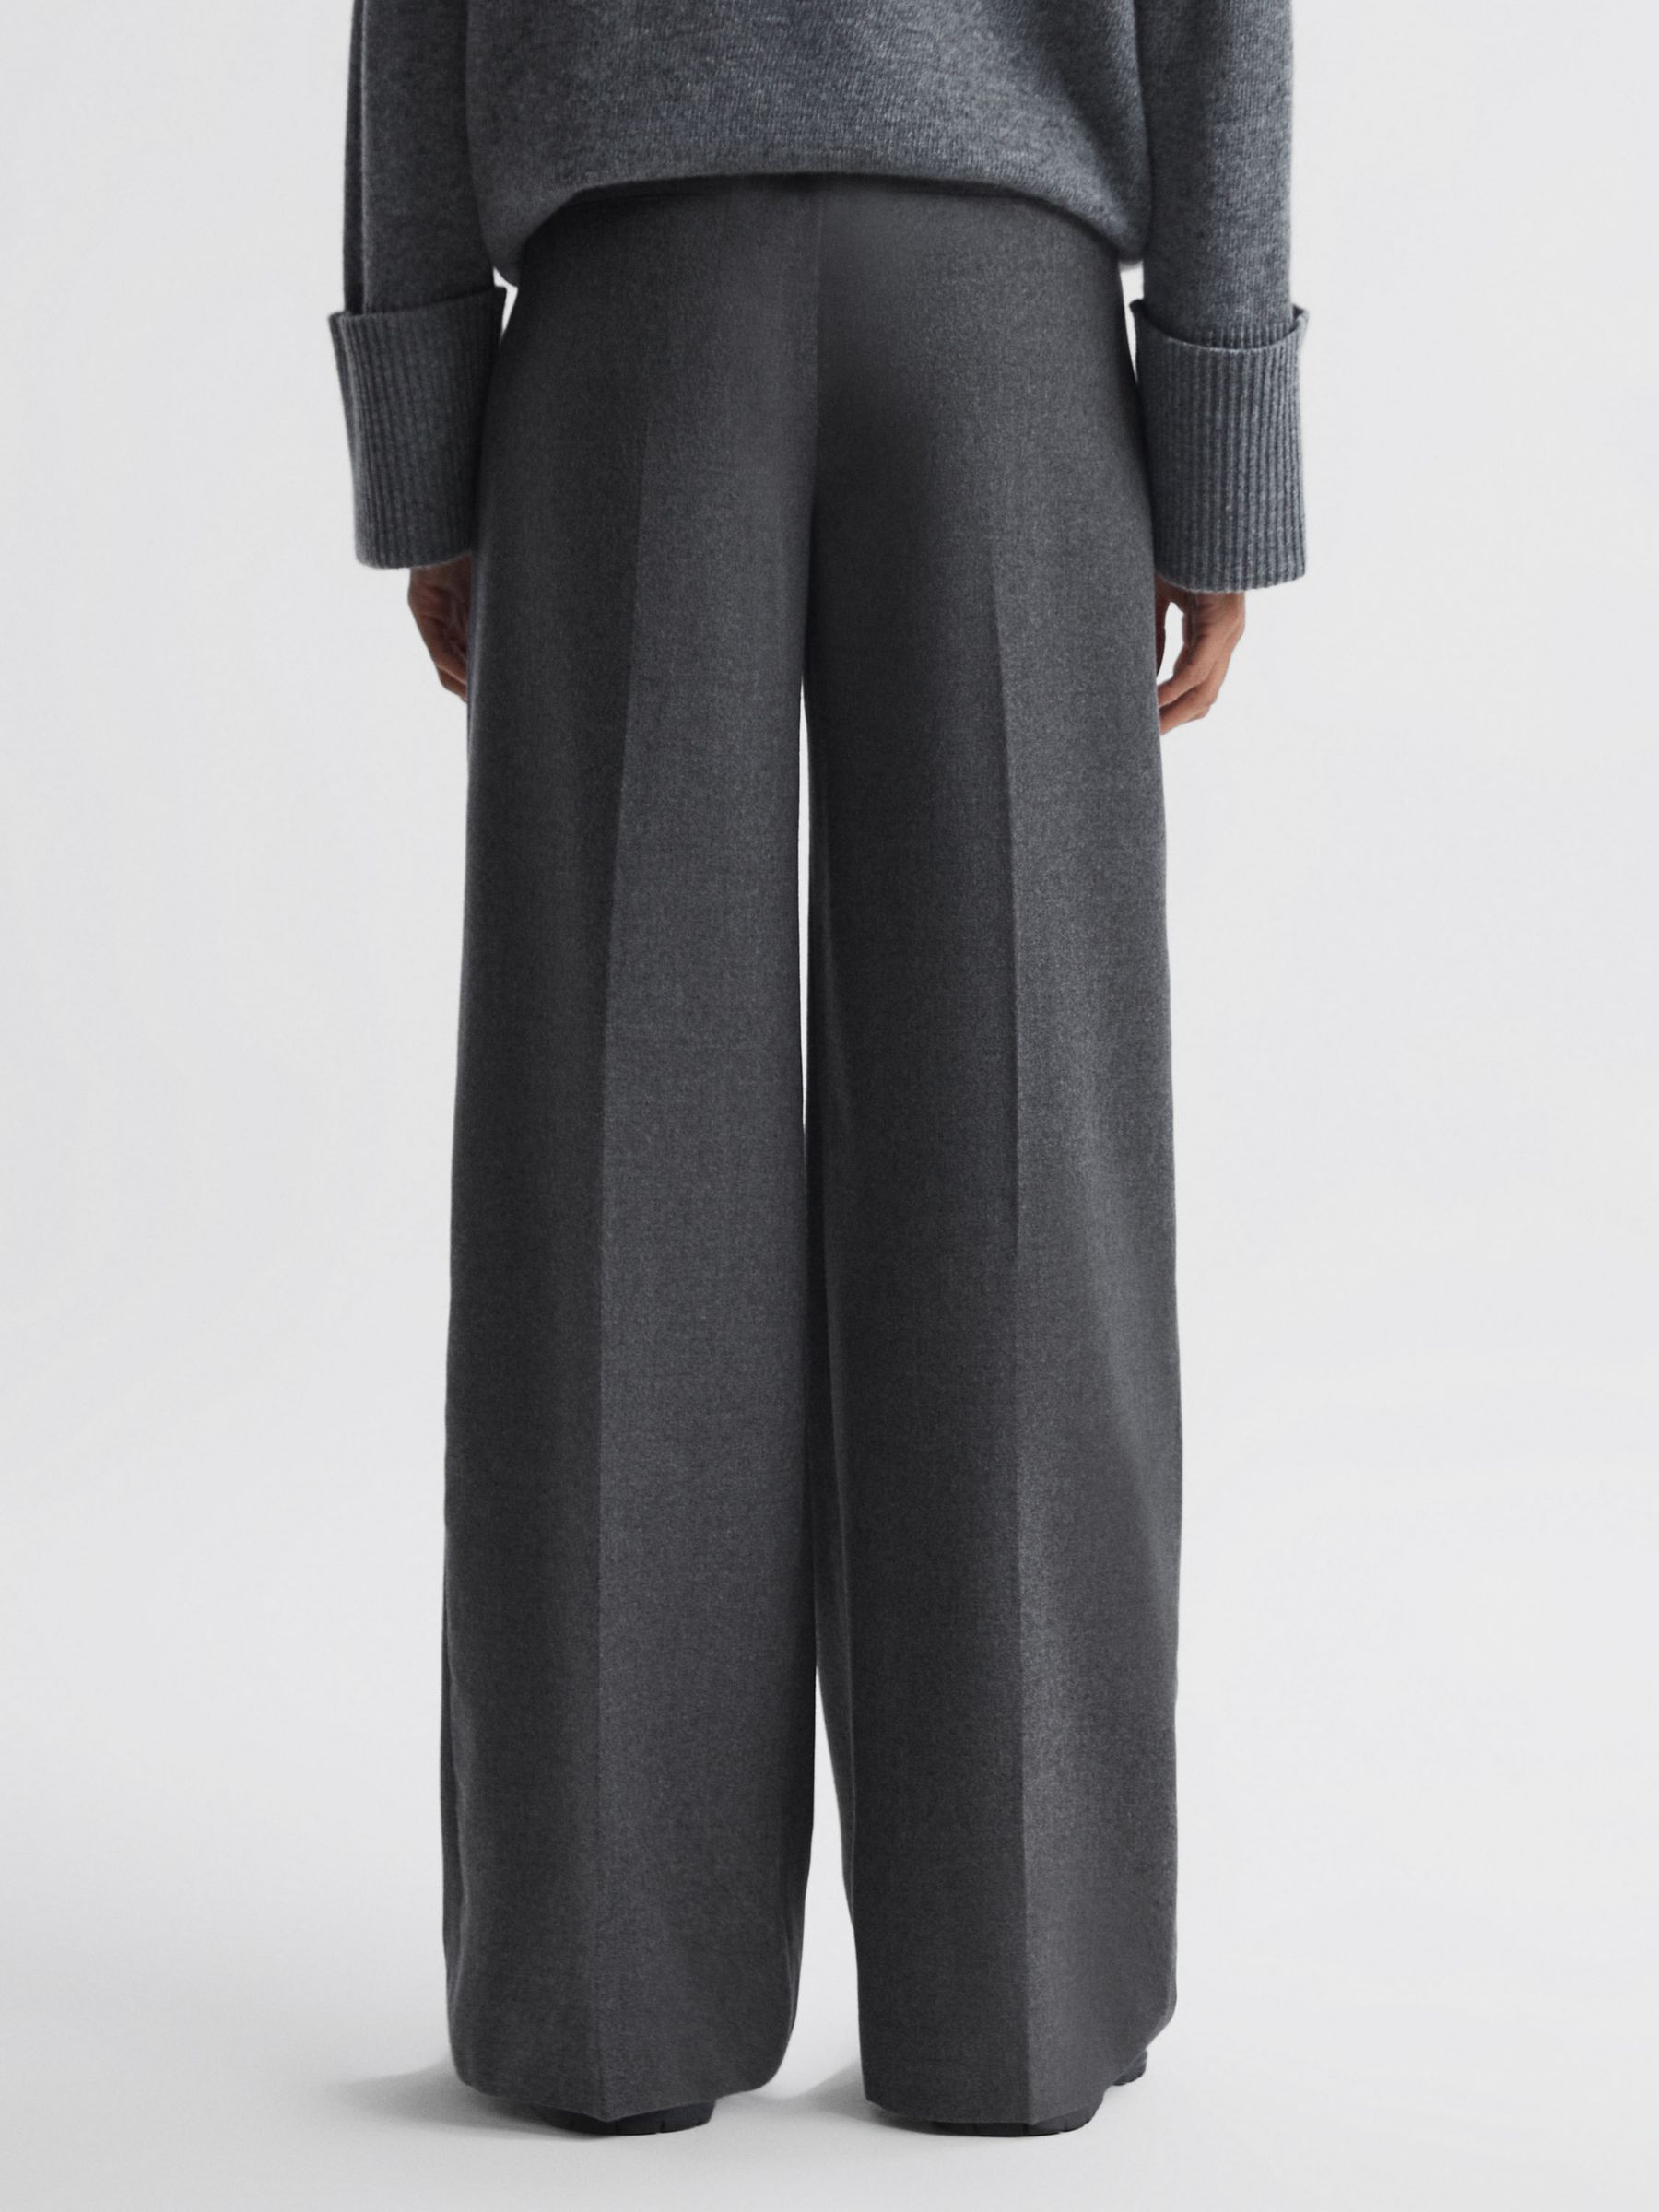 Buy Reiss Petite Valeria Wool Blend Flannel Wide Leg Trousers, Grey Online at johnlewis.com